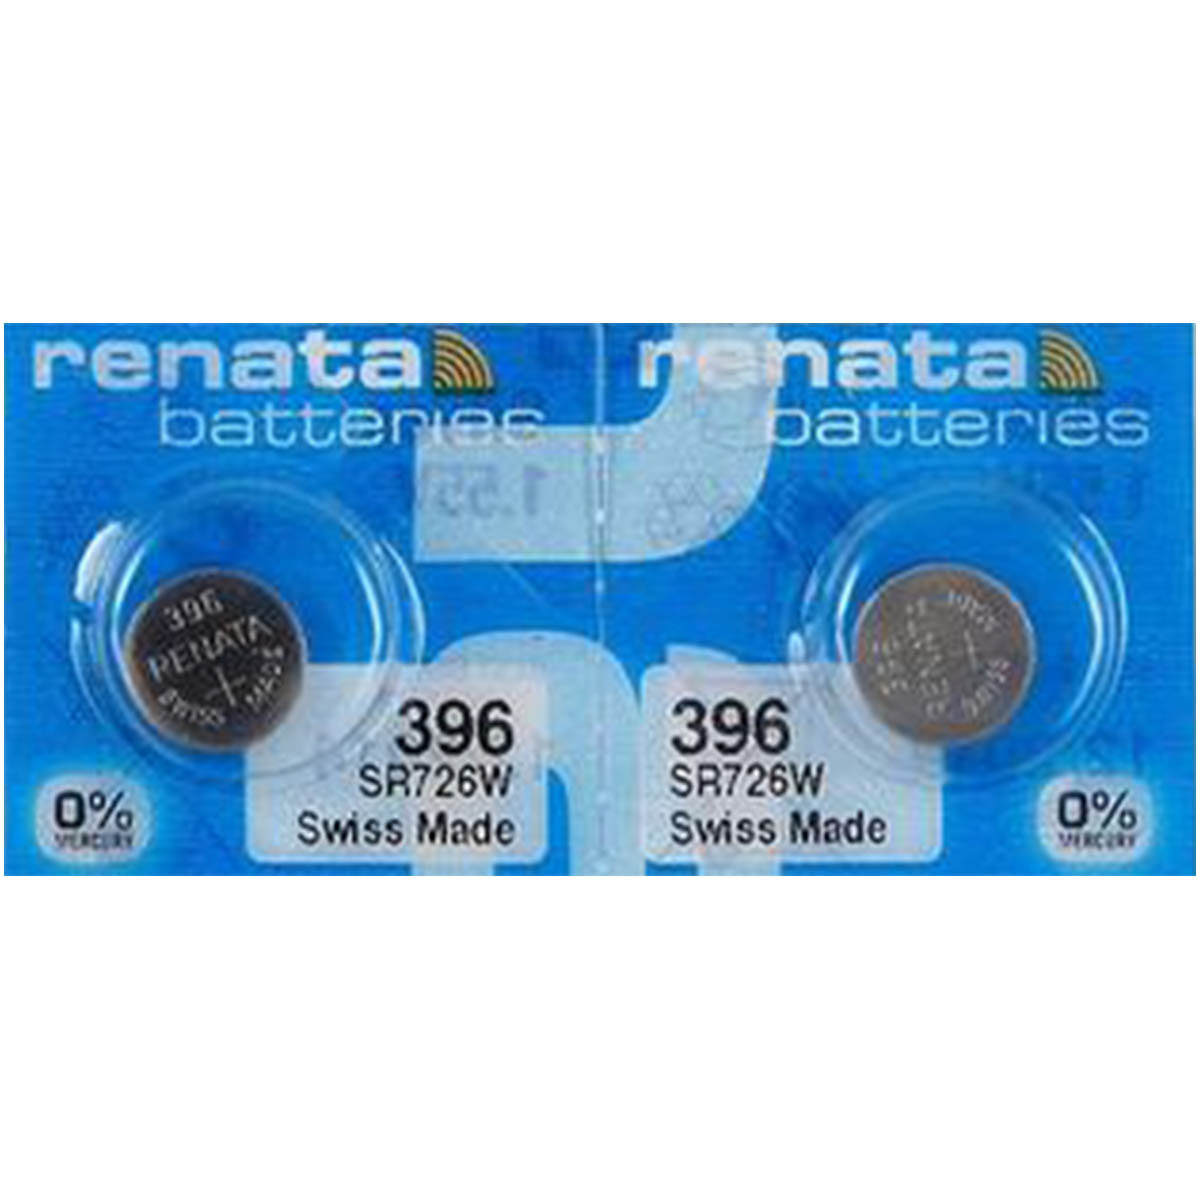 Renata 396 Battery (SR726W) Silver Oxide 1.55V (1PC)